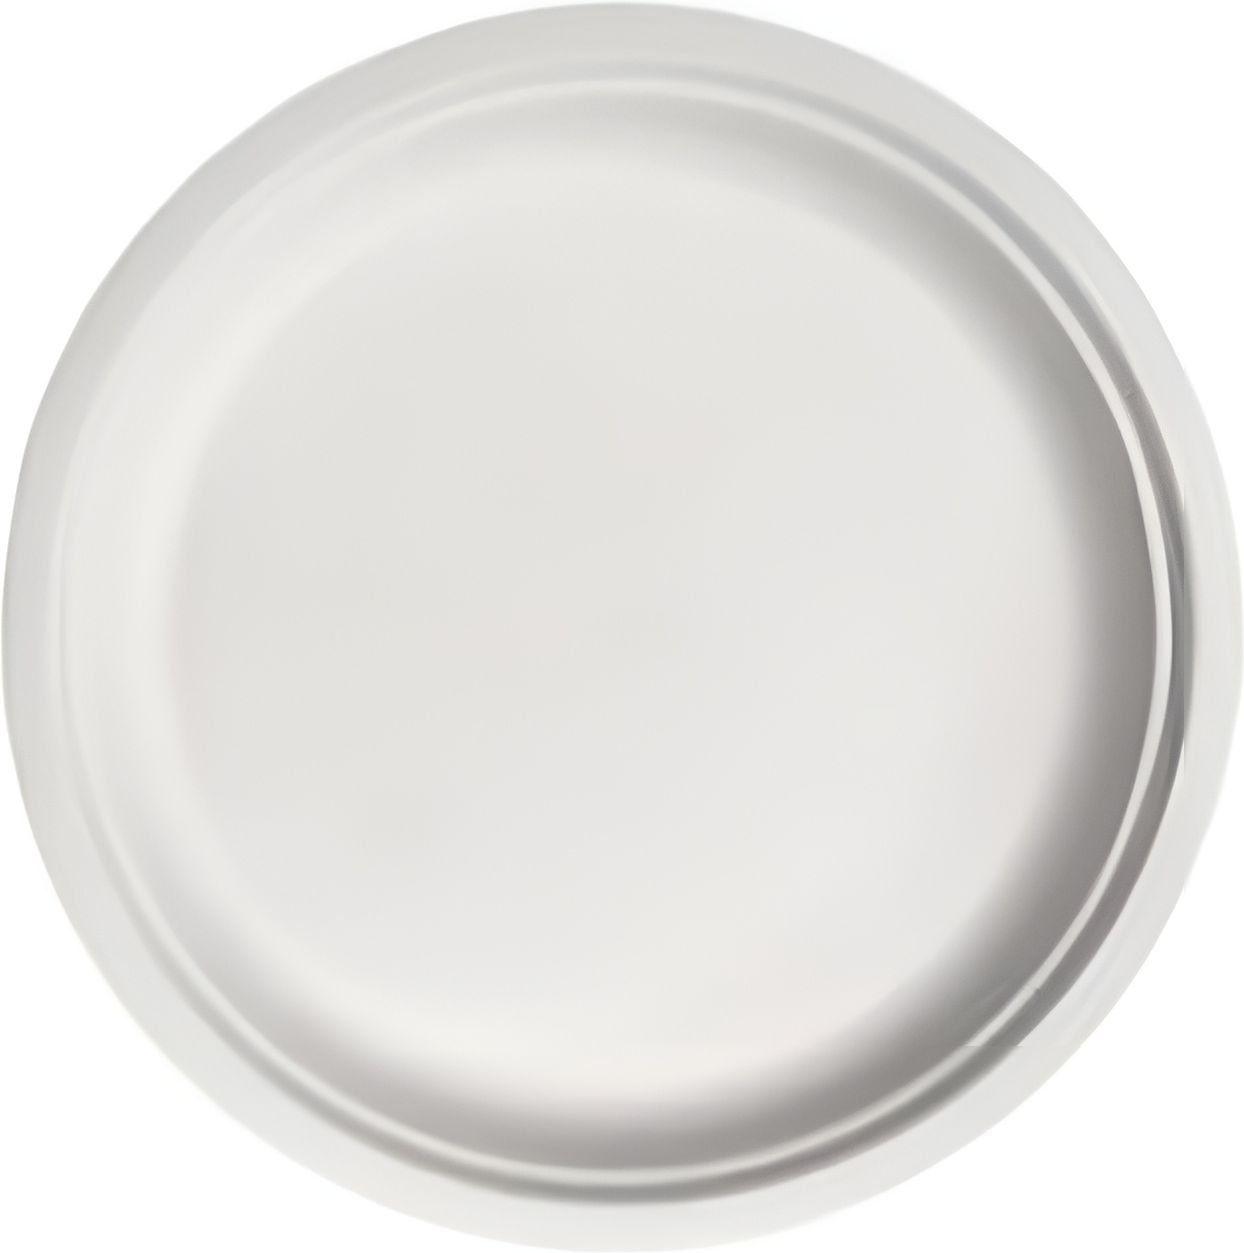 CKF Inc. - 10.37" Chinet Dinner Paper Plates, 500/cs - 22011